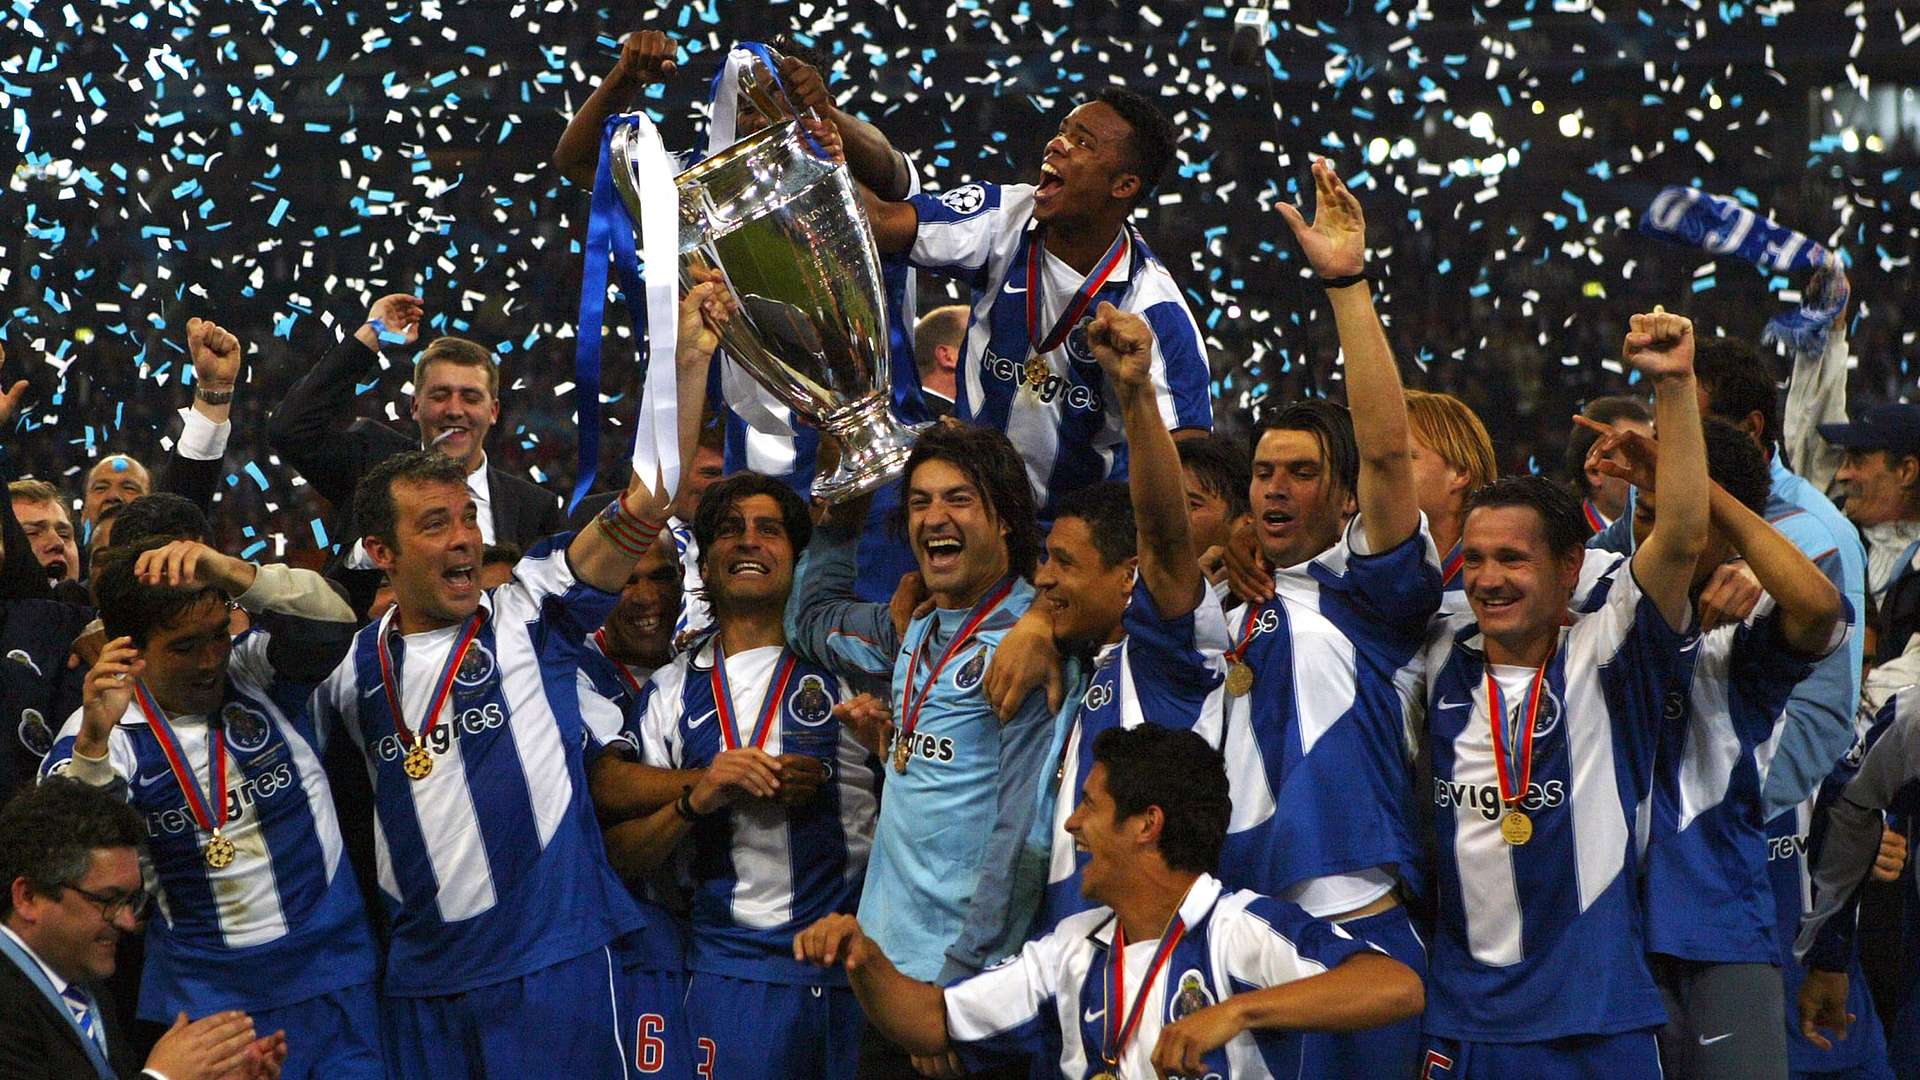 Porto 2004 Champions League winners